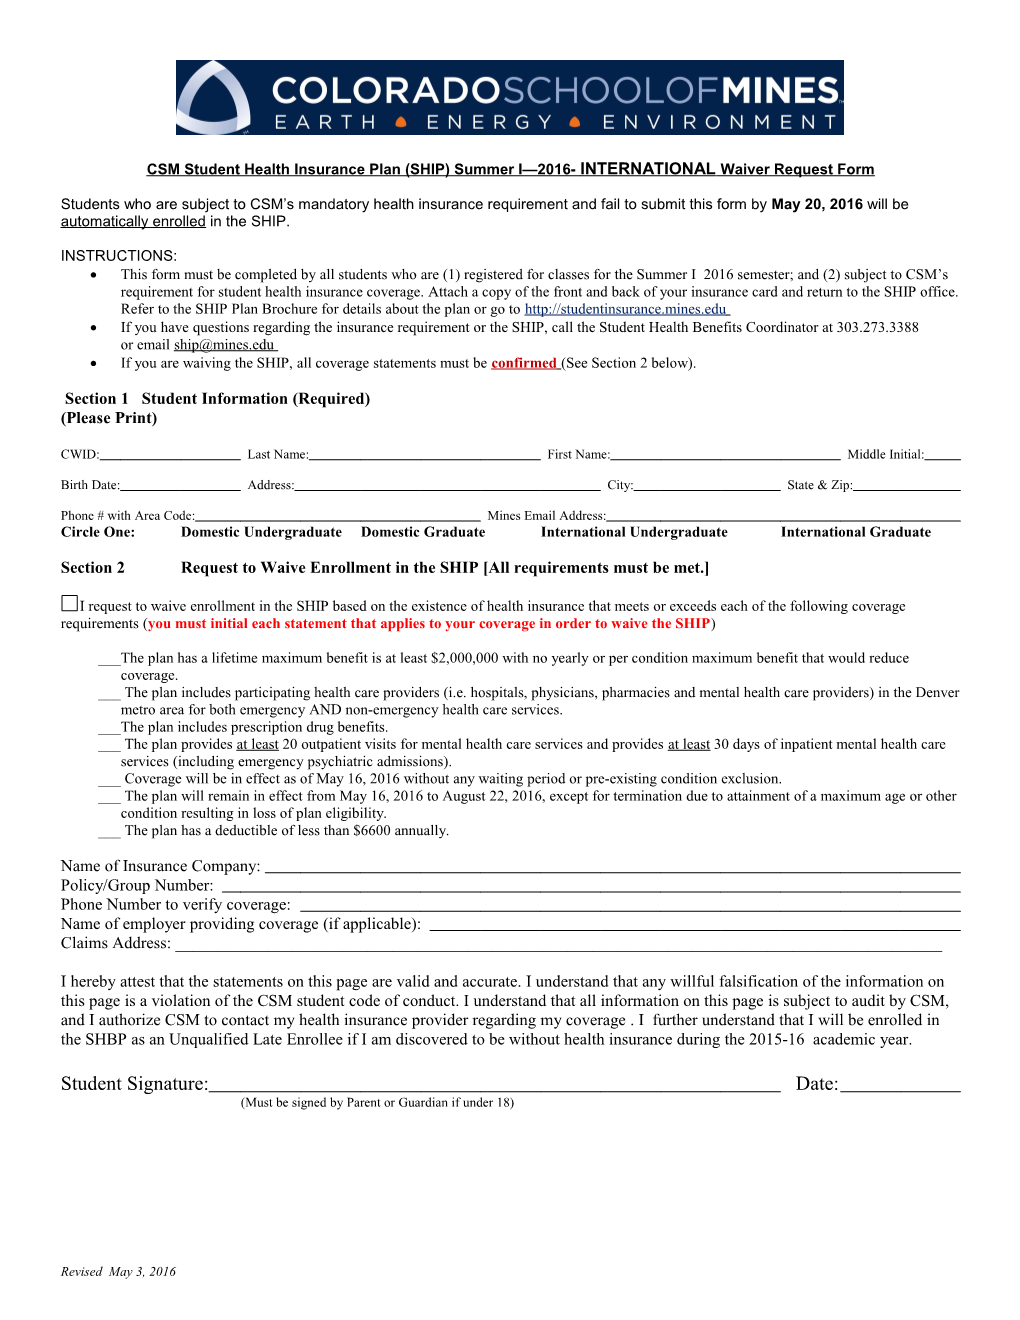 CSM Student Health Insurance Plan (SHIP) Summer I 2016- INTERNATIONAL Waiver Request Form